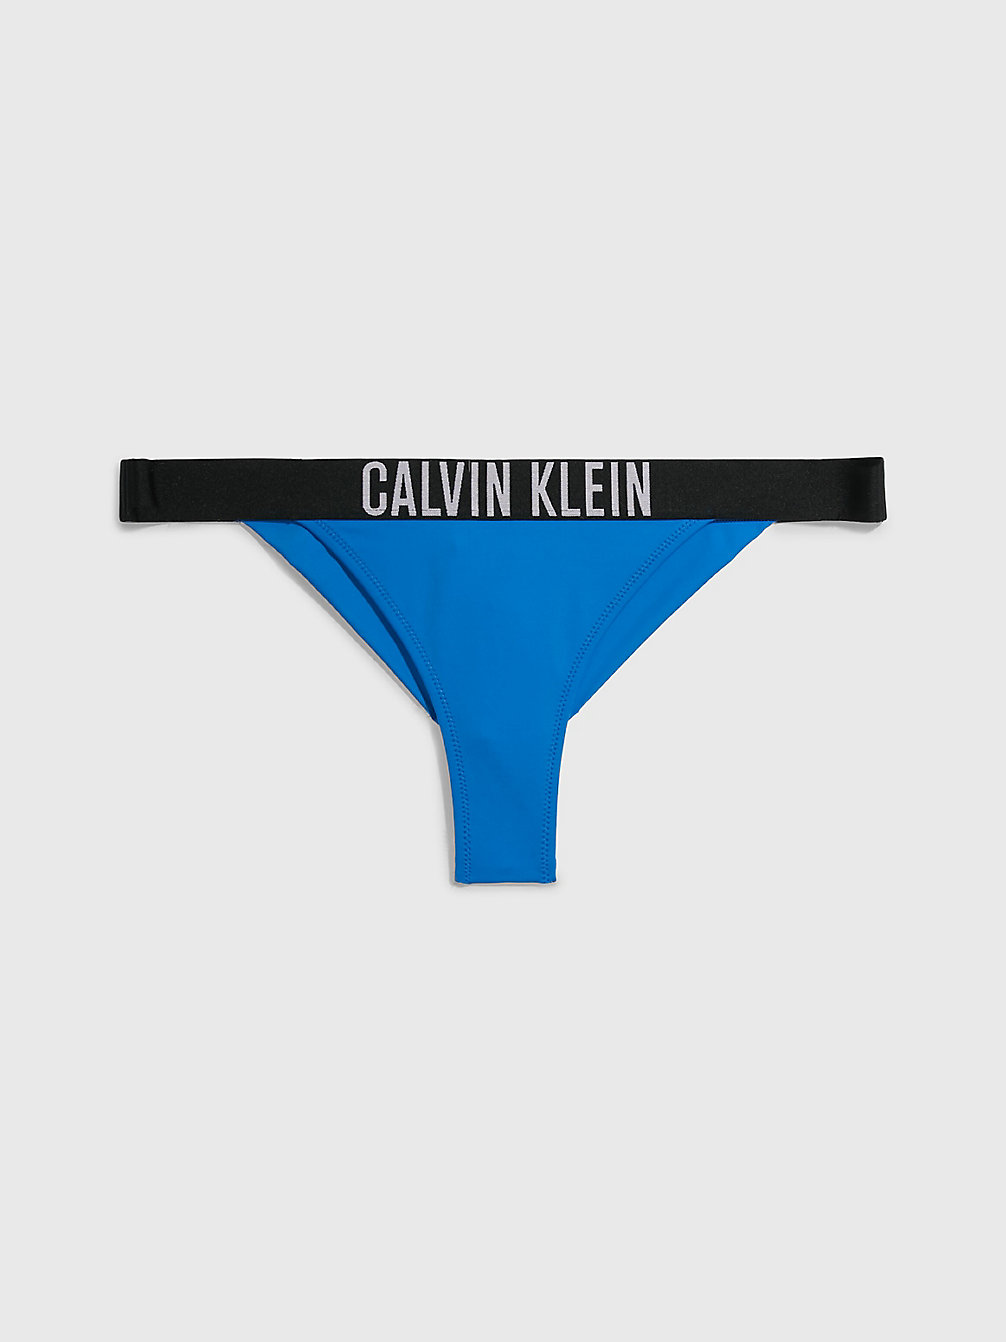 Bas De Bikini Brésilien - Intense Power > DYNAMIC BLUE > undefined femmes > Calvin Klein